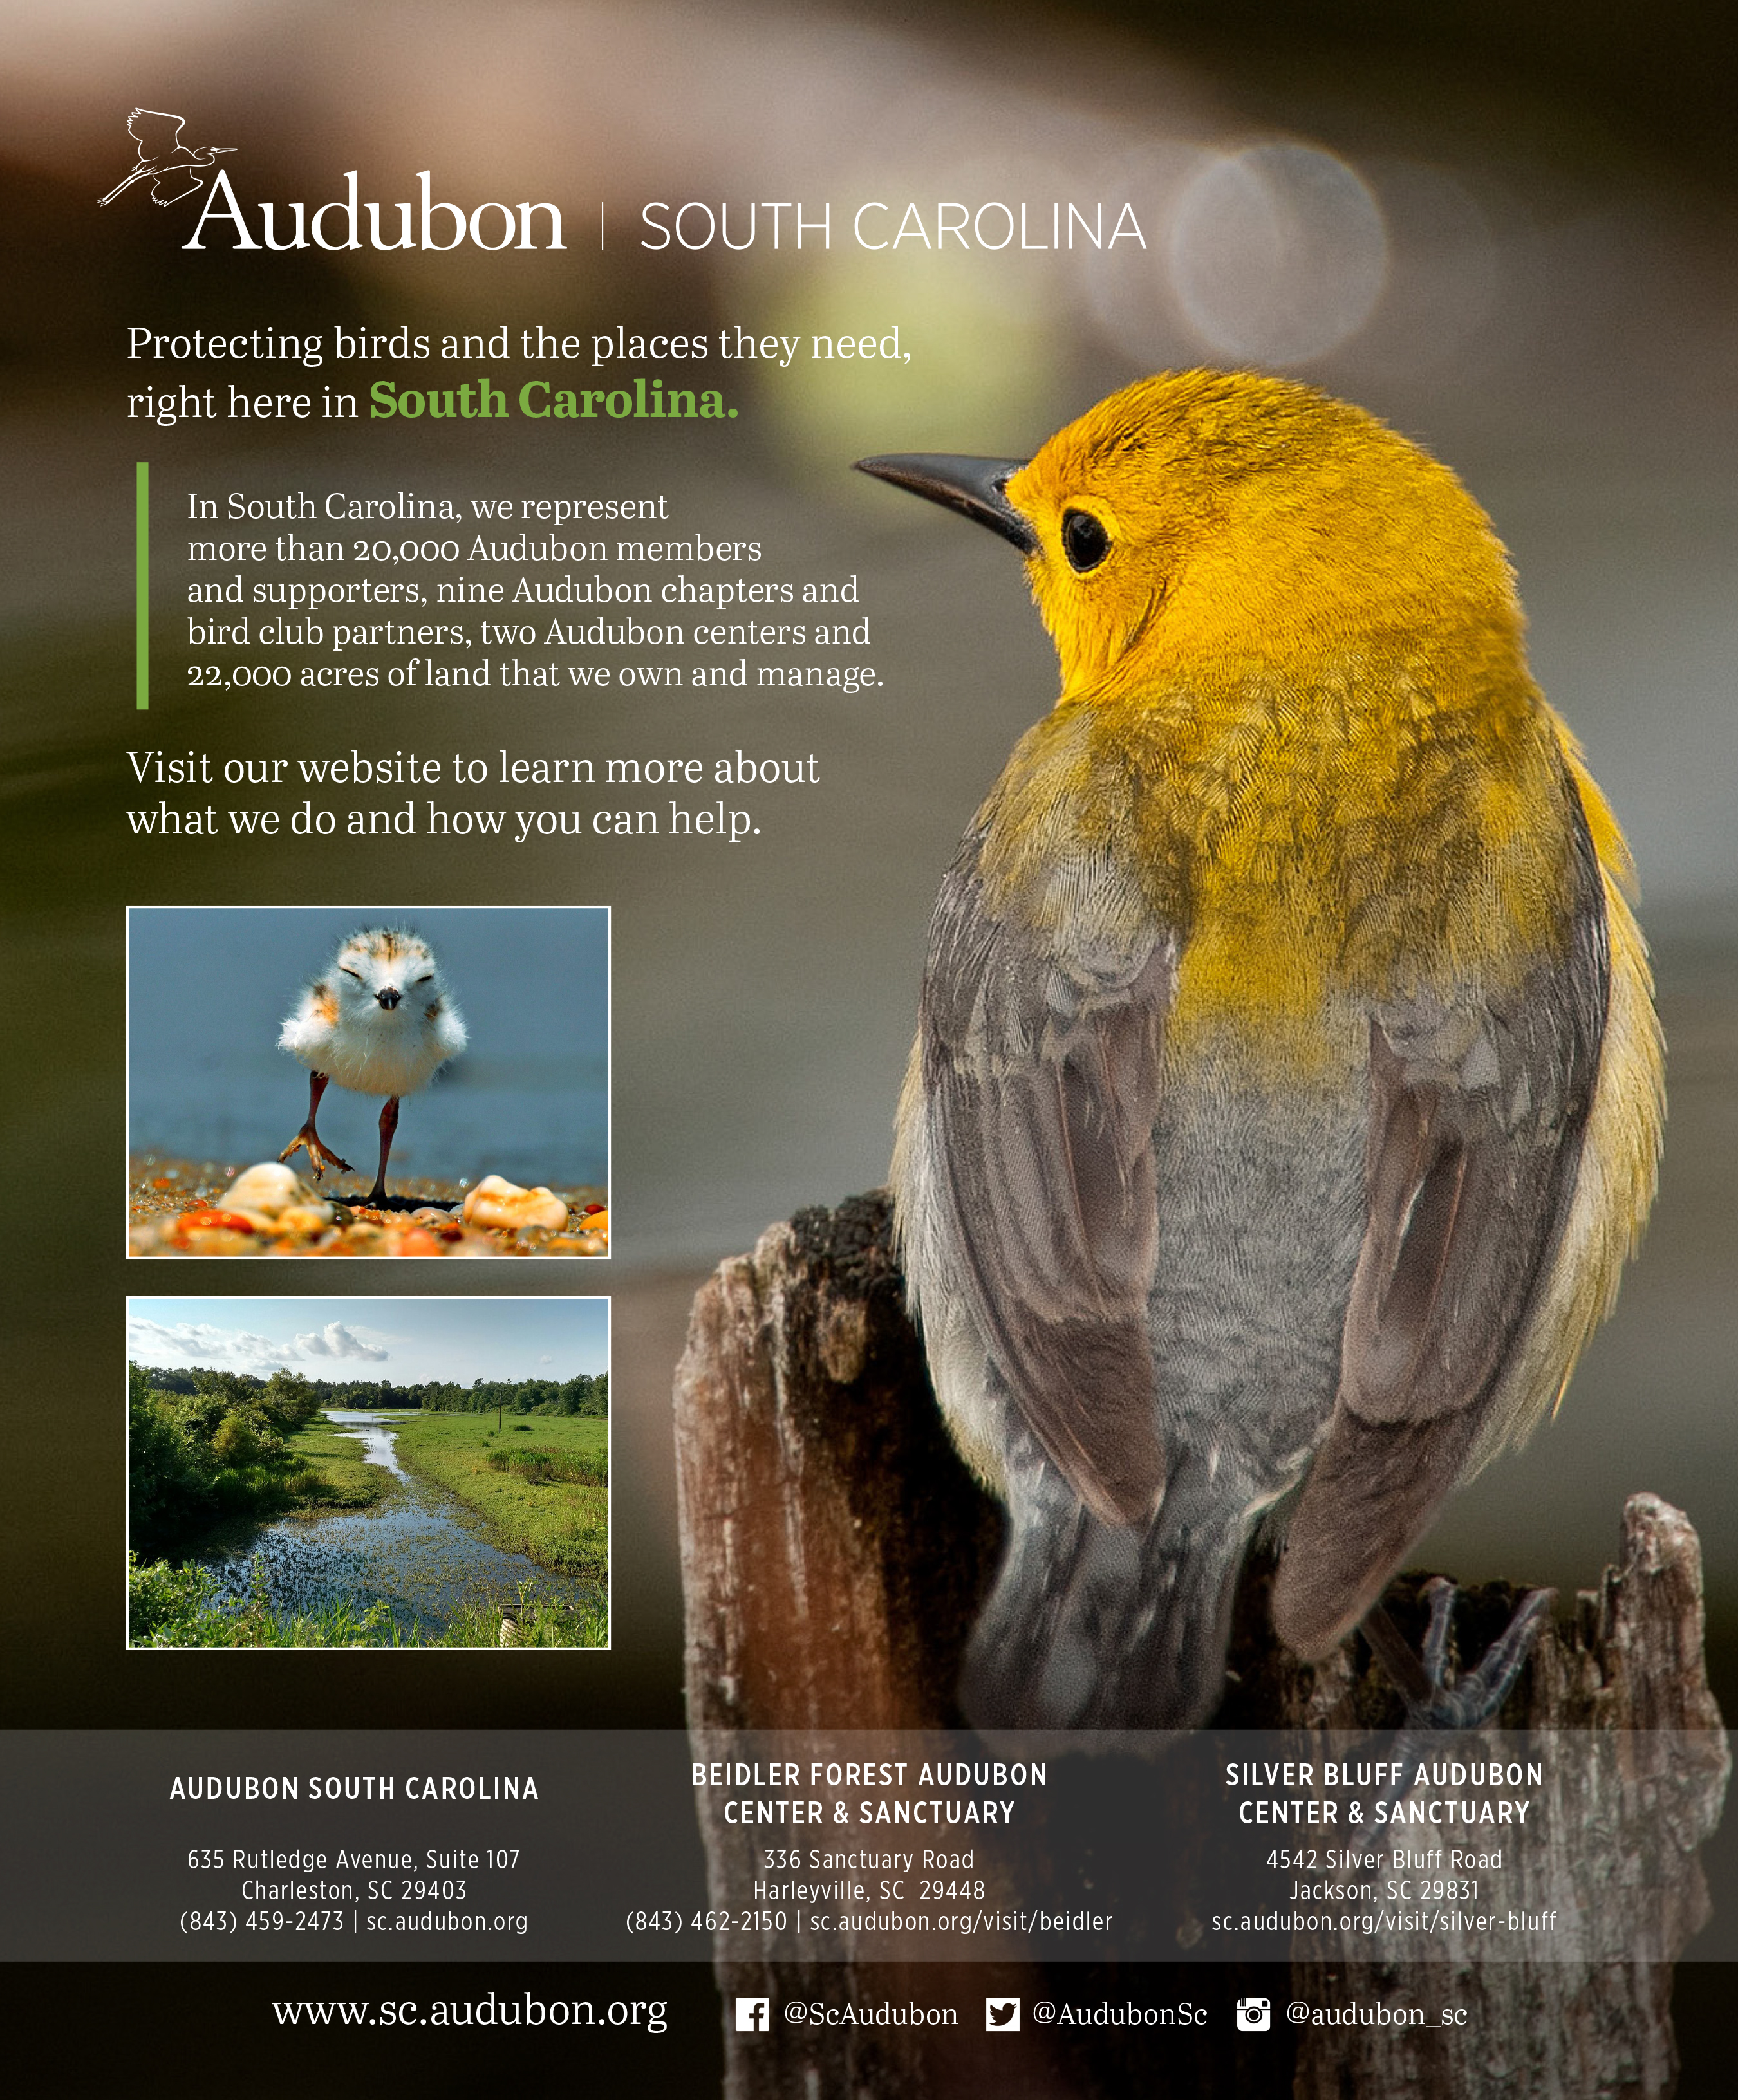 Visit <a href="https://sc.audubon.org/">https://sc.audubon.org/</a>